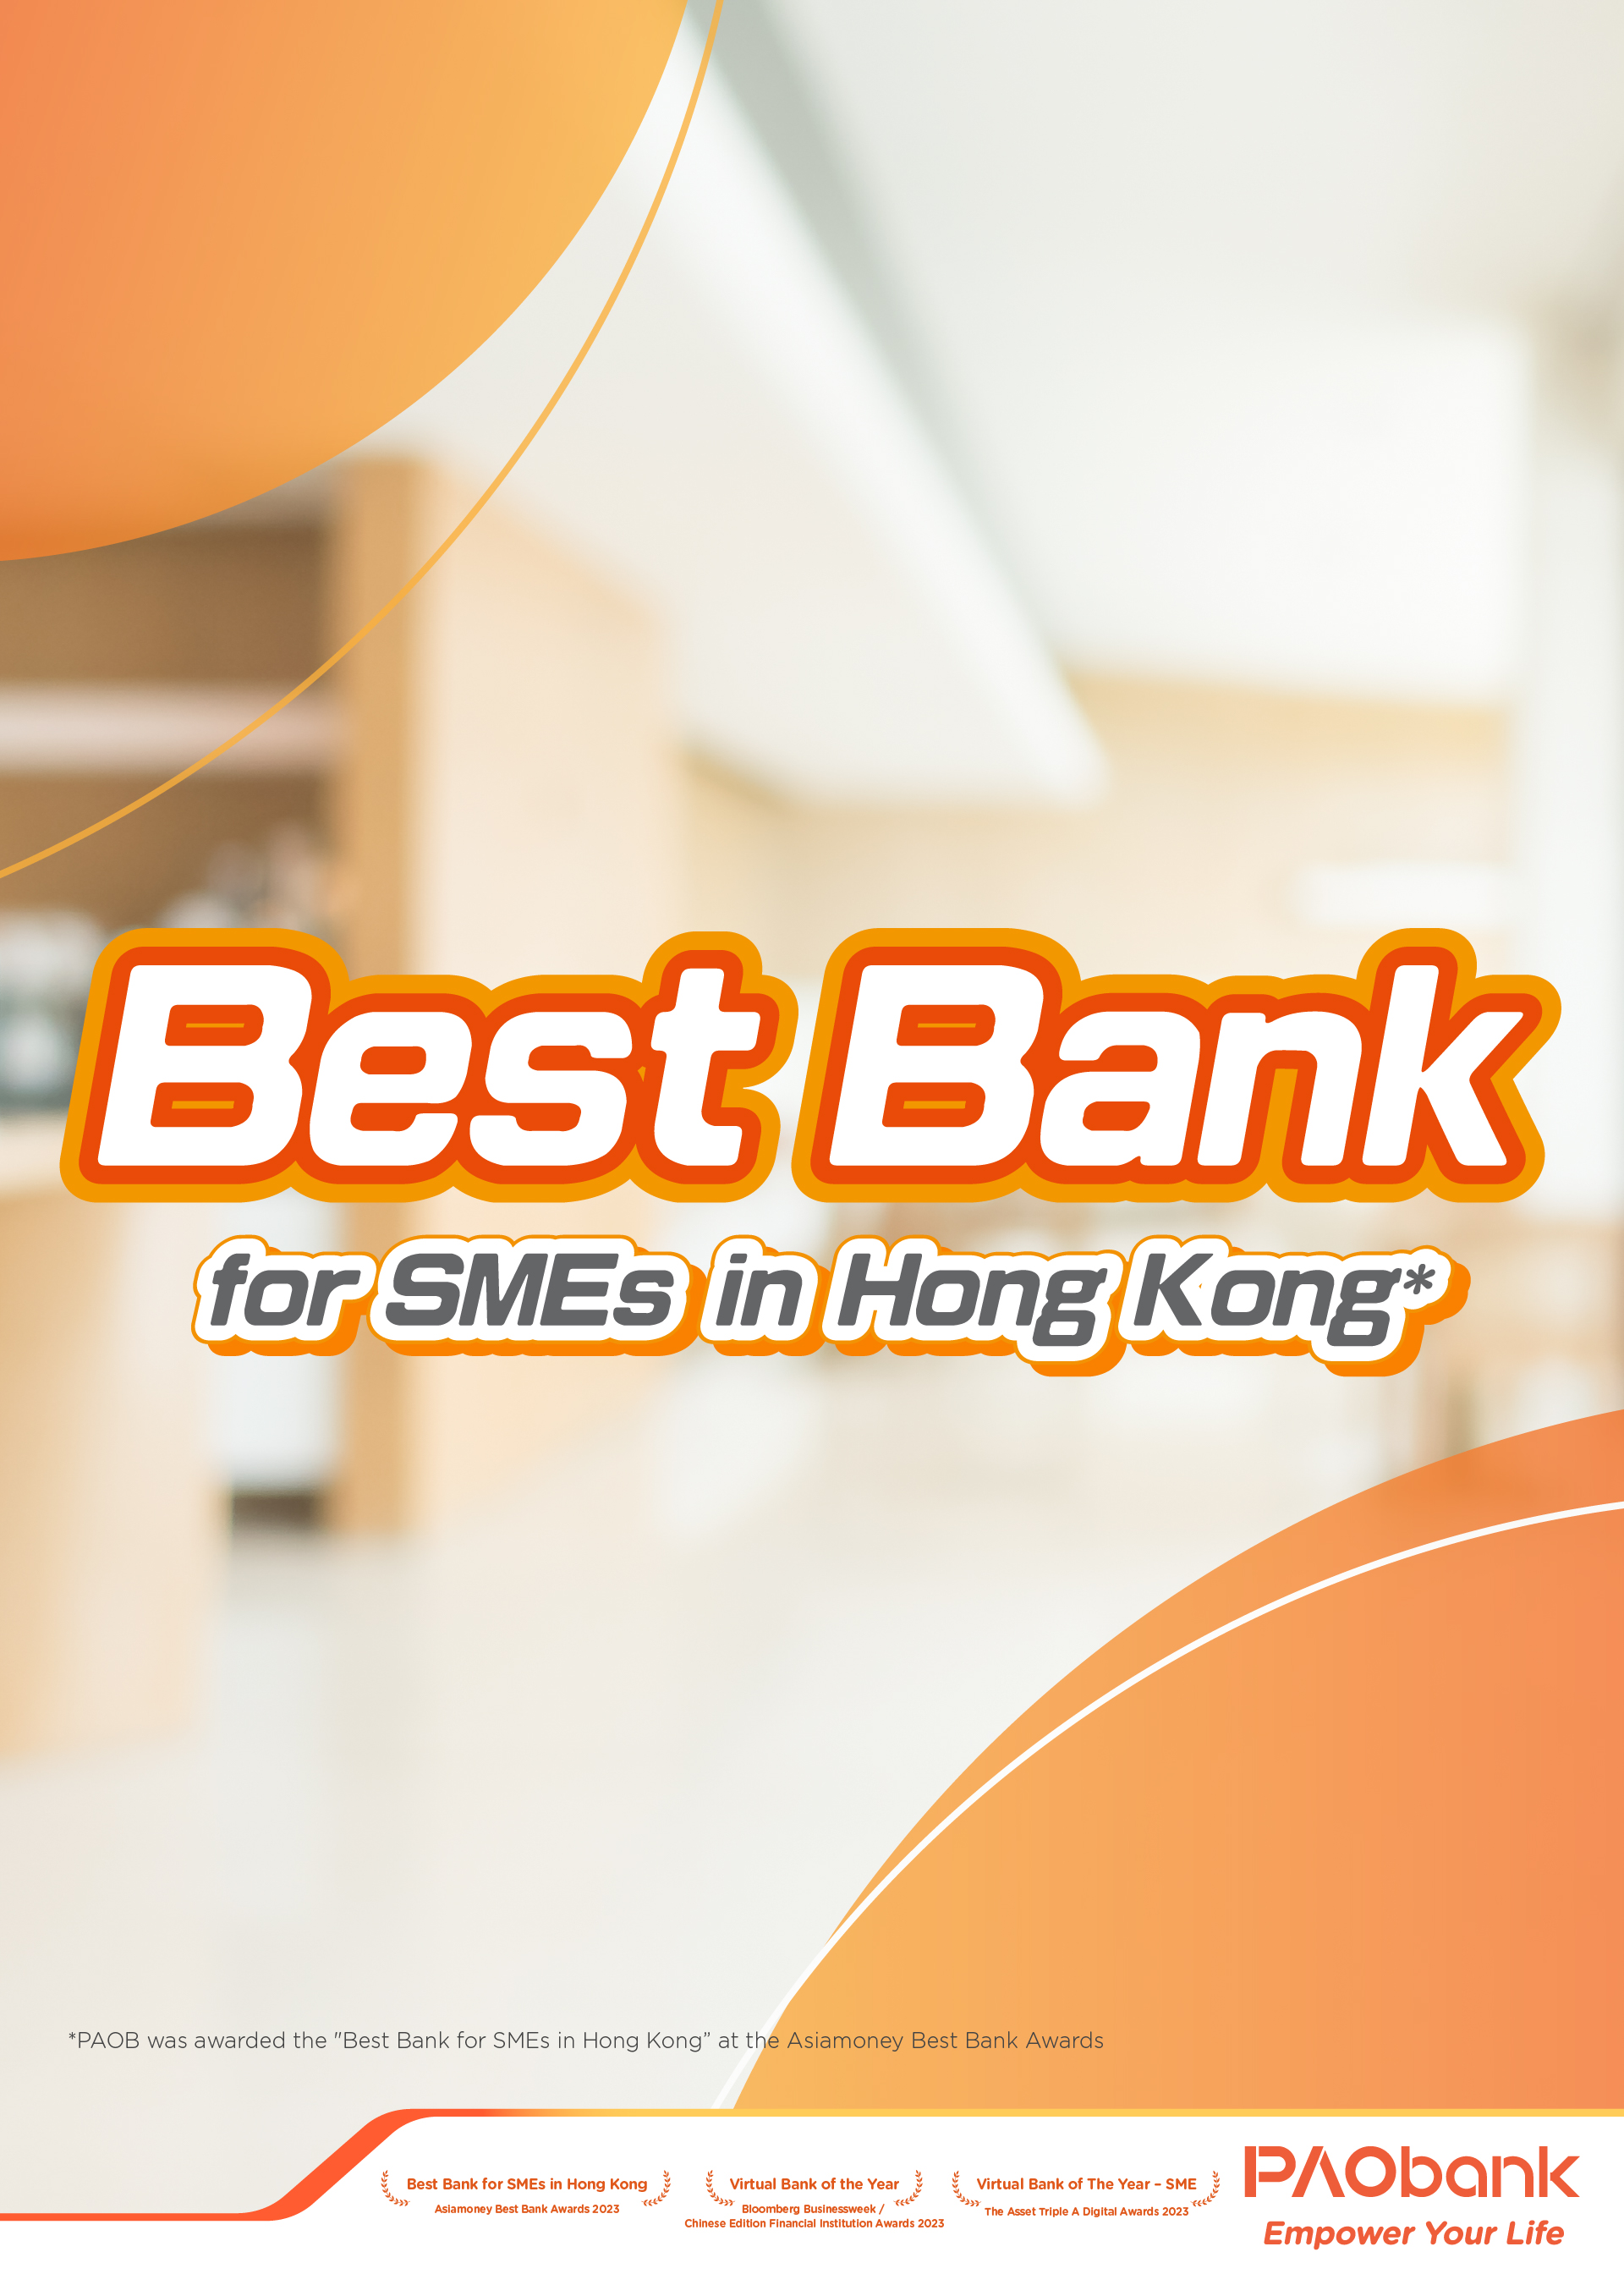 PAOB SME Services - PAOB SME Loan Cash Reward Offer